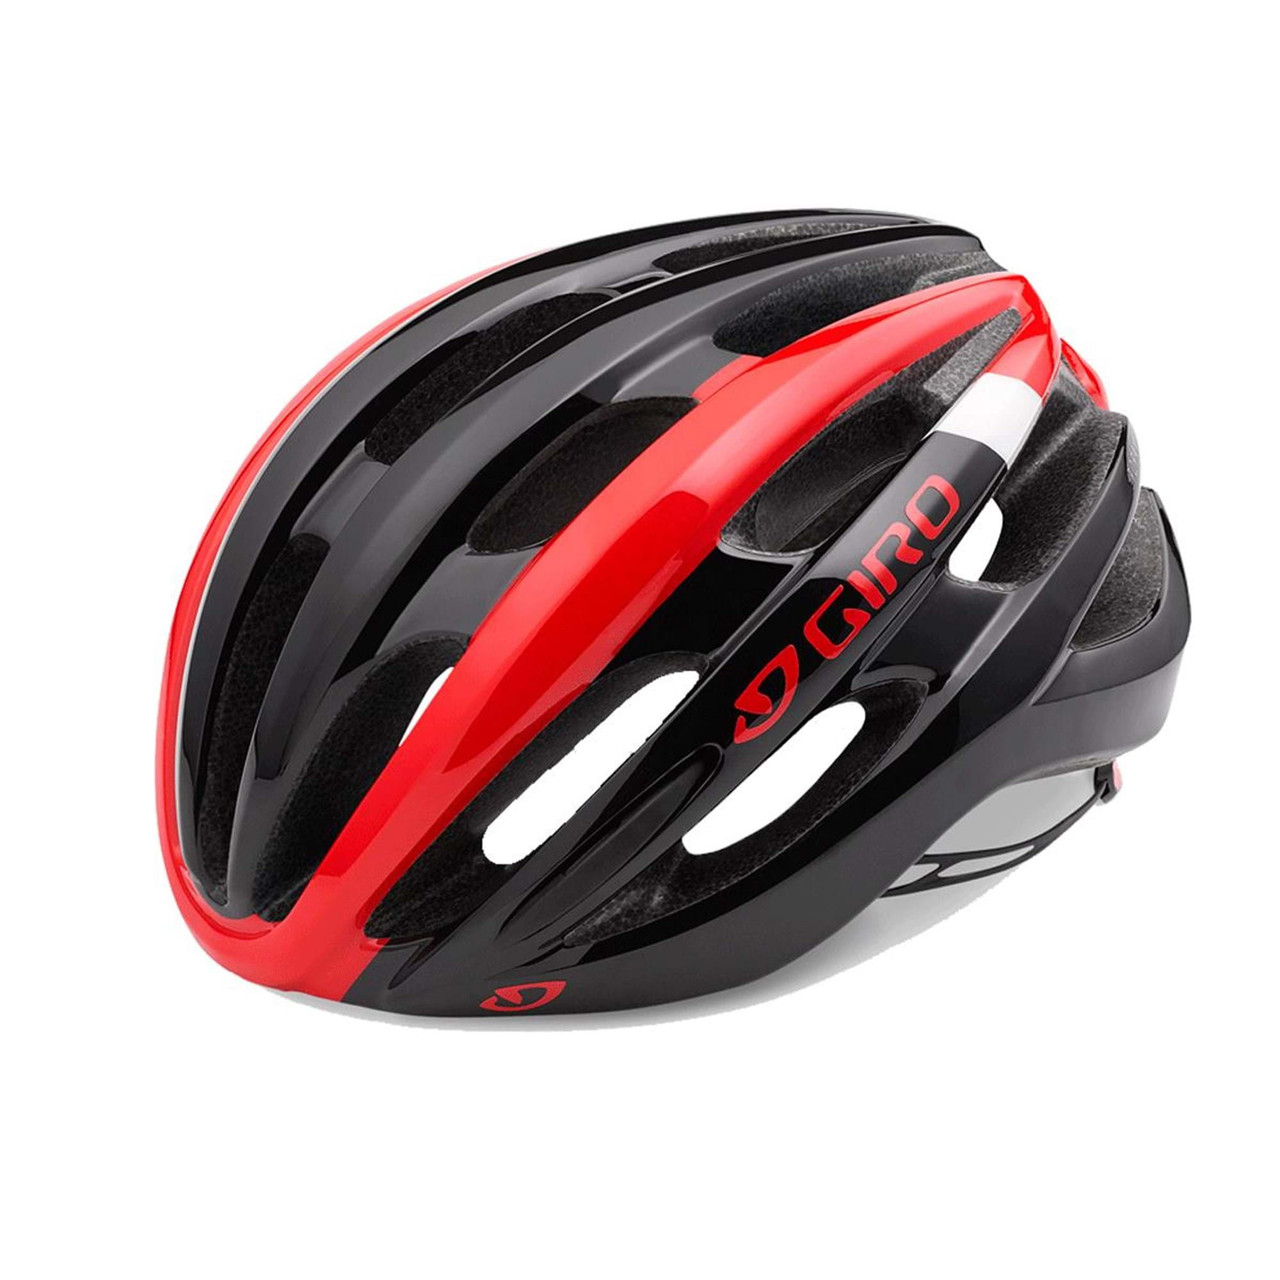 Giro Foray Road Helmet In Red/Black